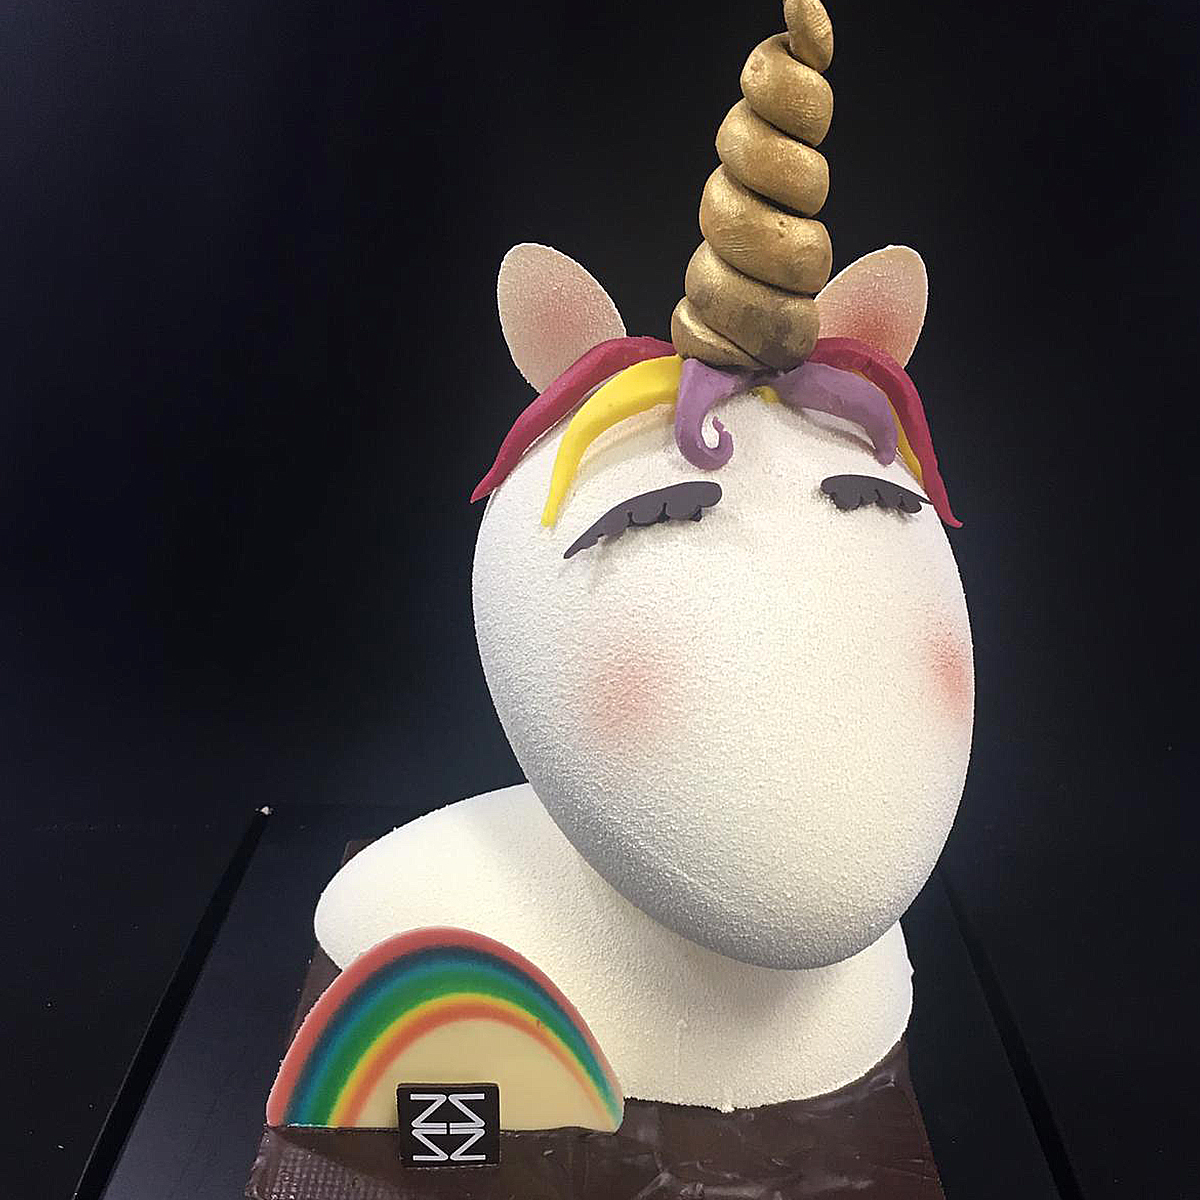 mona de pascua artesana de chocolate con forma de unicornio